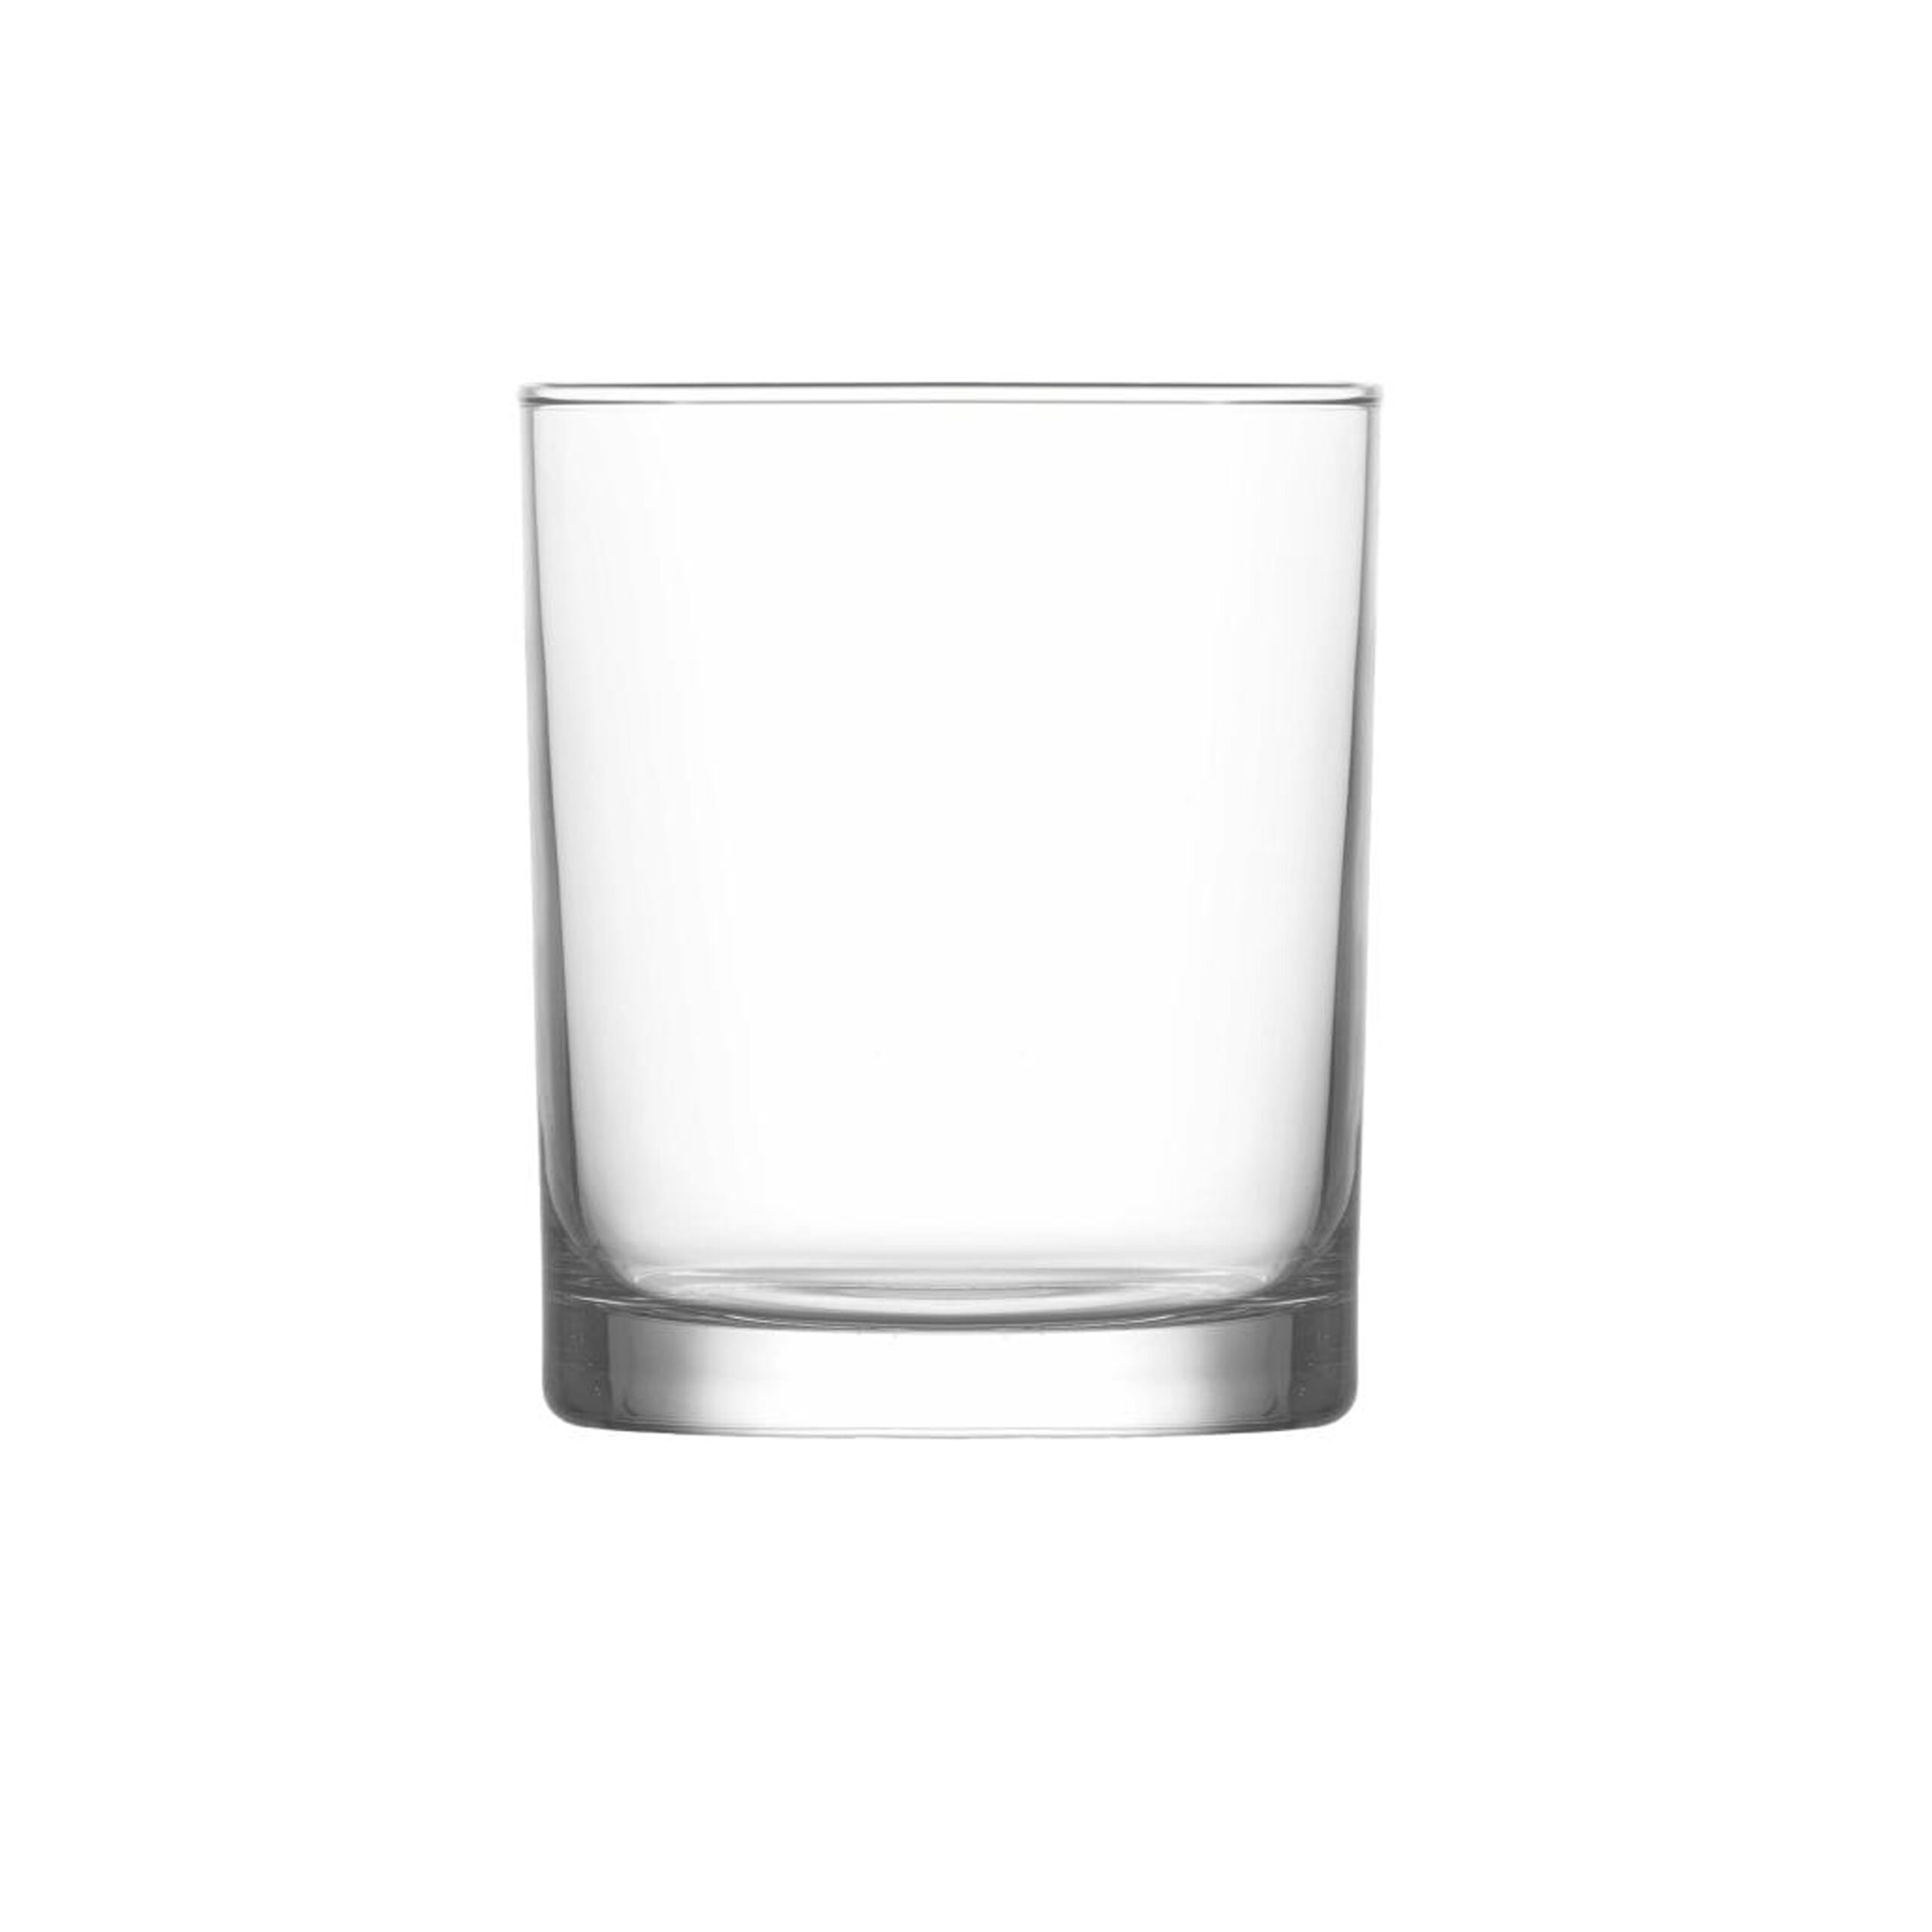 NICE ONE GLASS
TUMBLER
WHISKEY 320ml
(8x6)